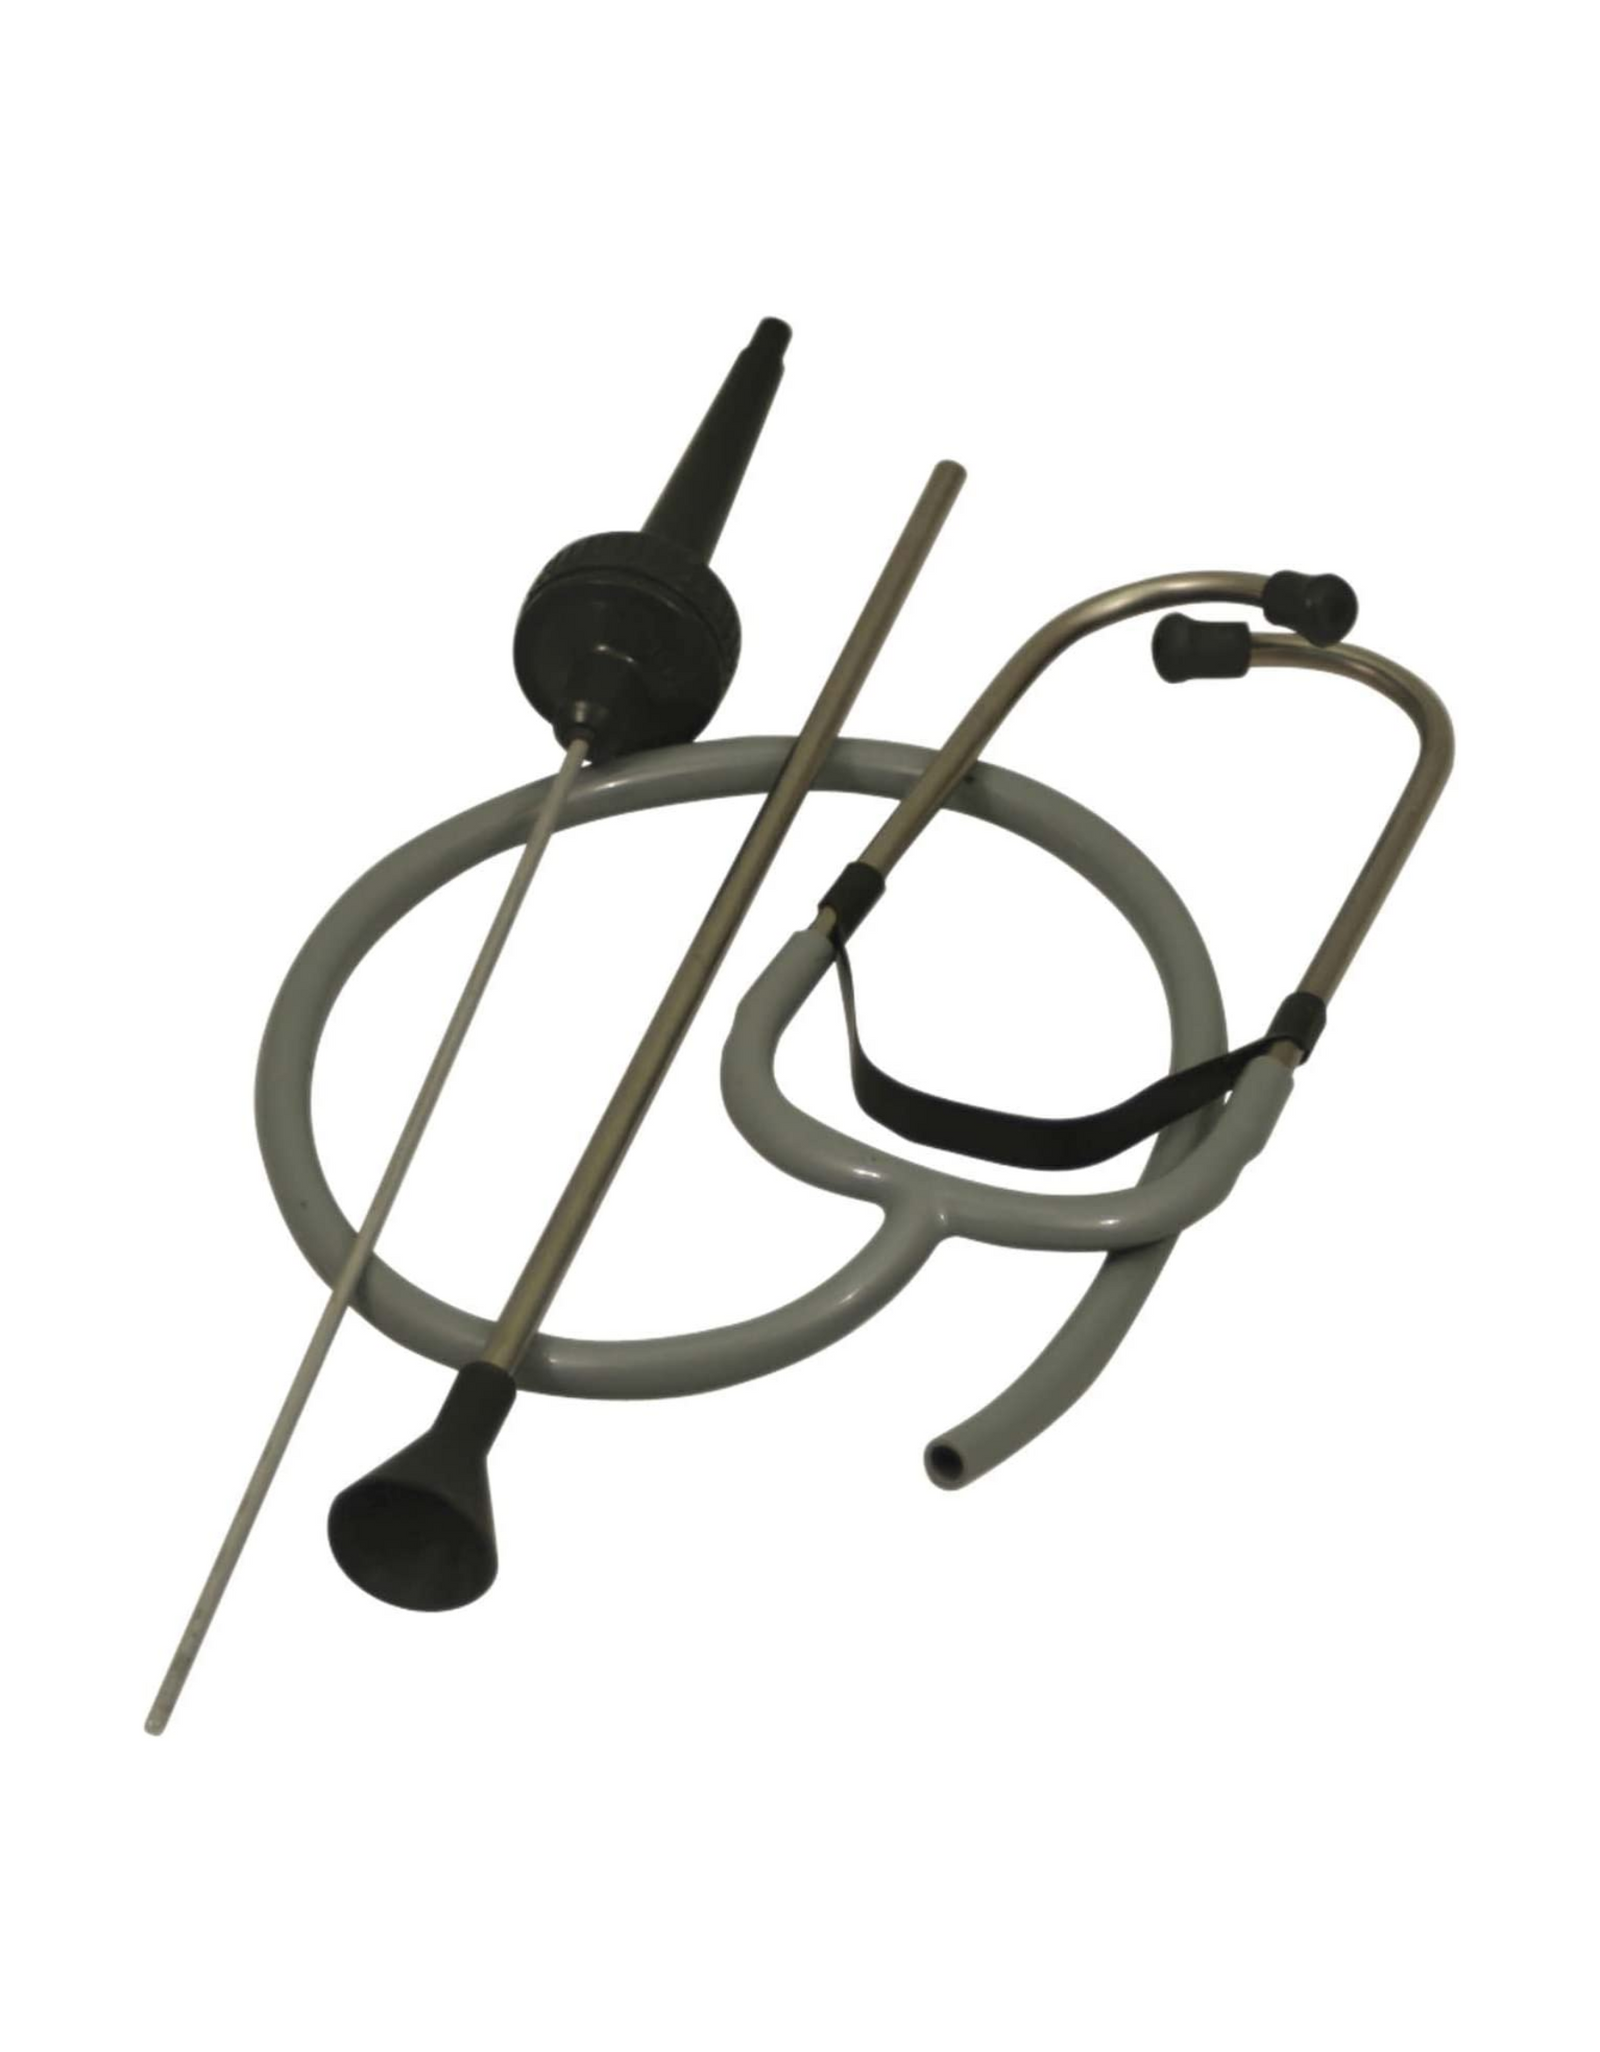 Lisle 52750 Stethoscope Kit